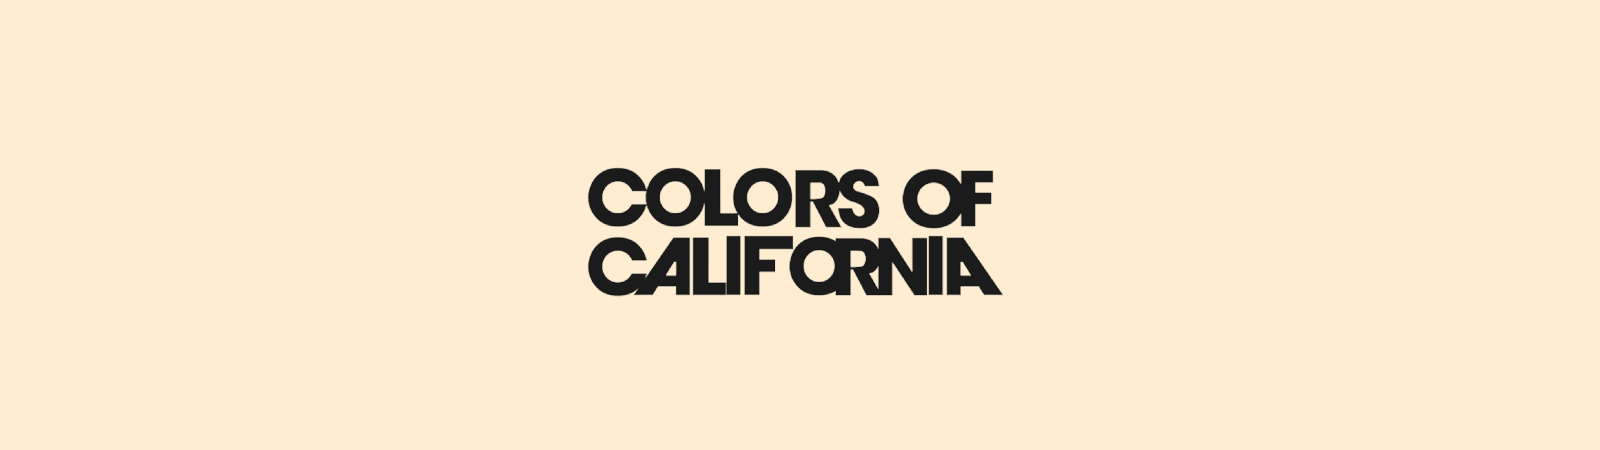 Colors of California Kinderschuhe online kaufen im GISY Shop